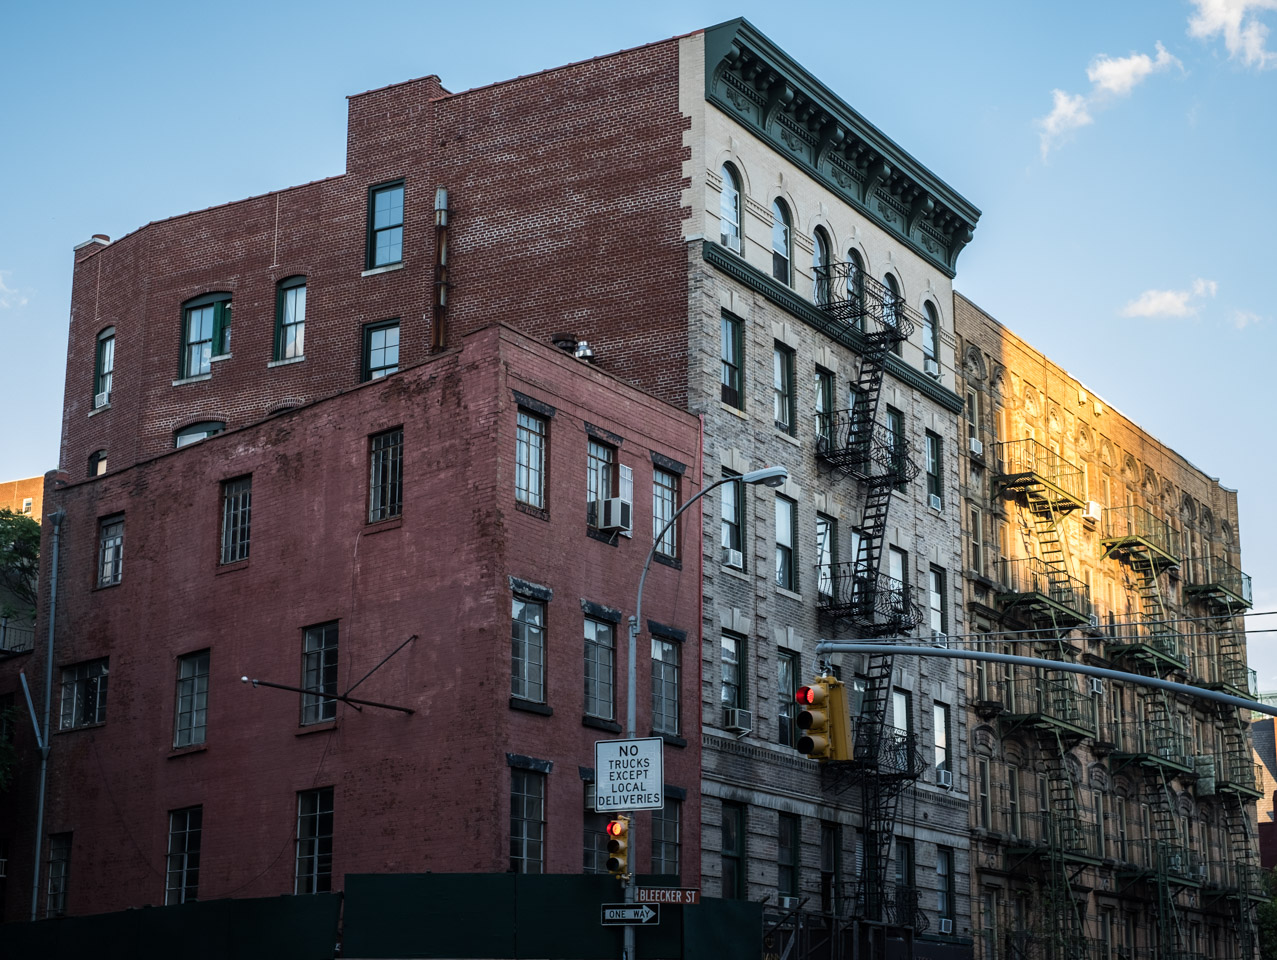 Brick buildings on Bleeker street in lower Manhattan